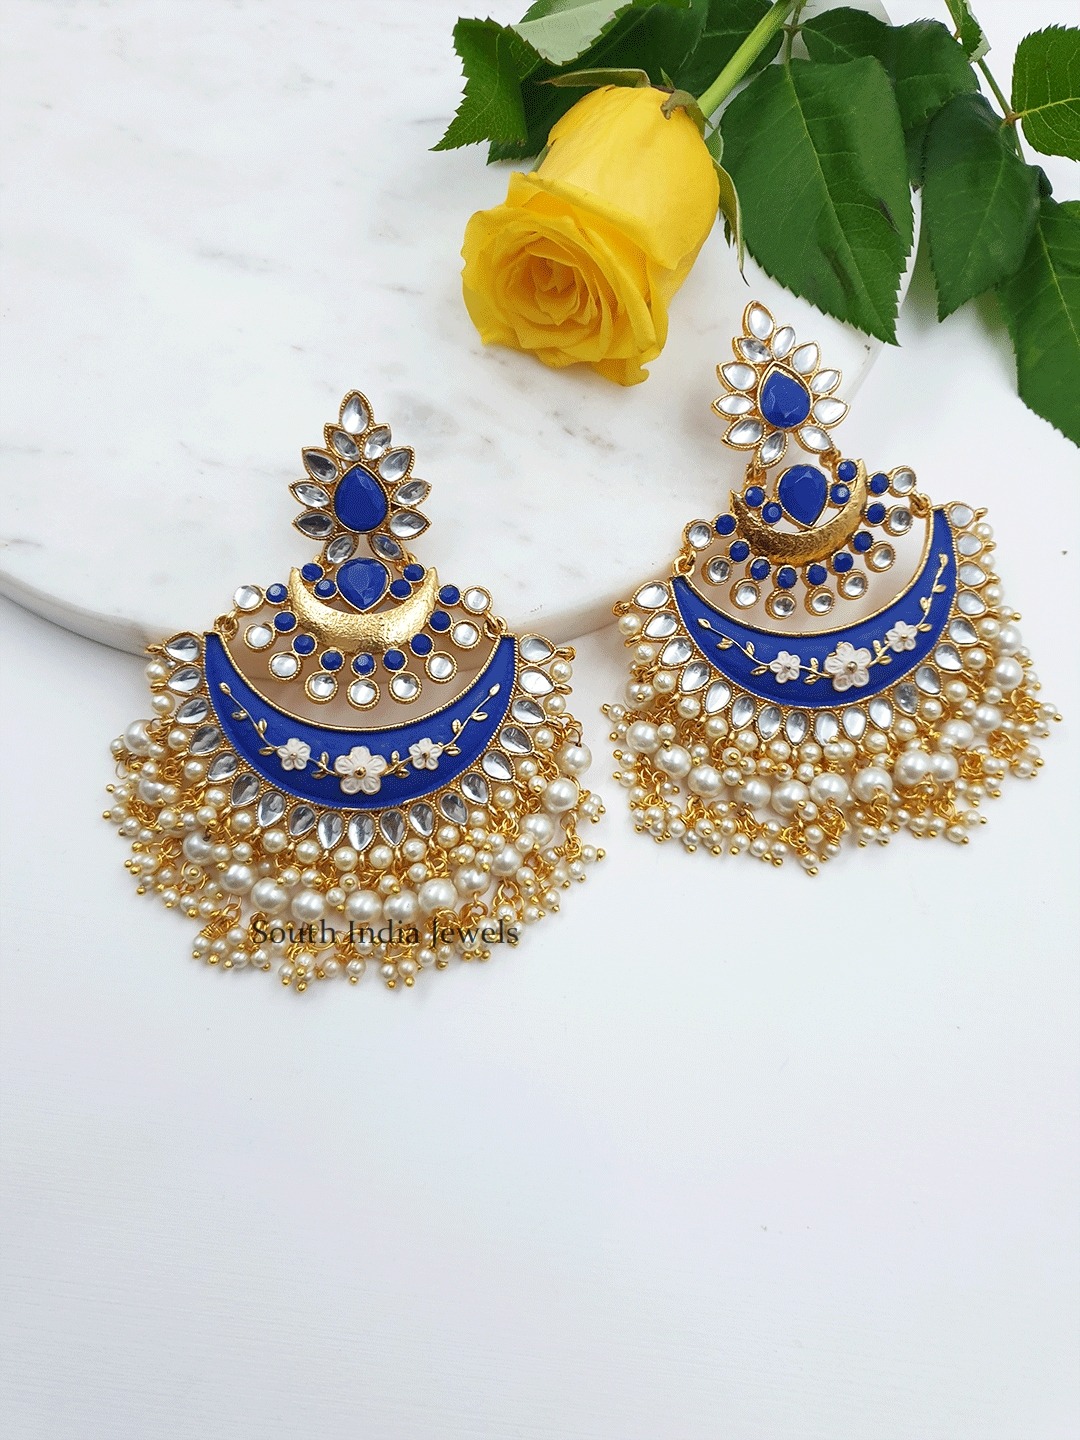 Pretty Meenakari Chandbali Earrings - South India Jewels